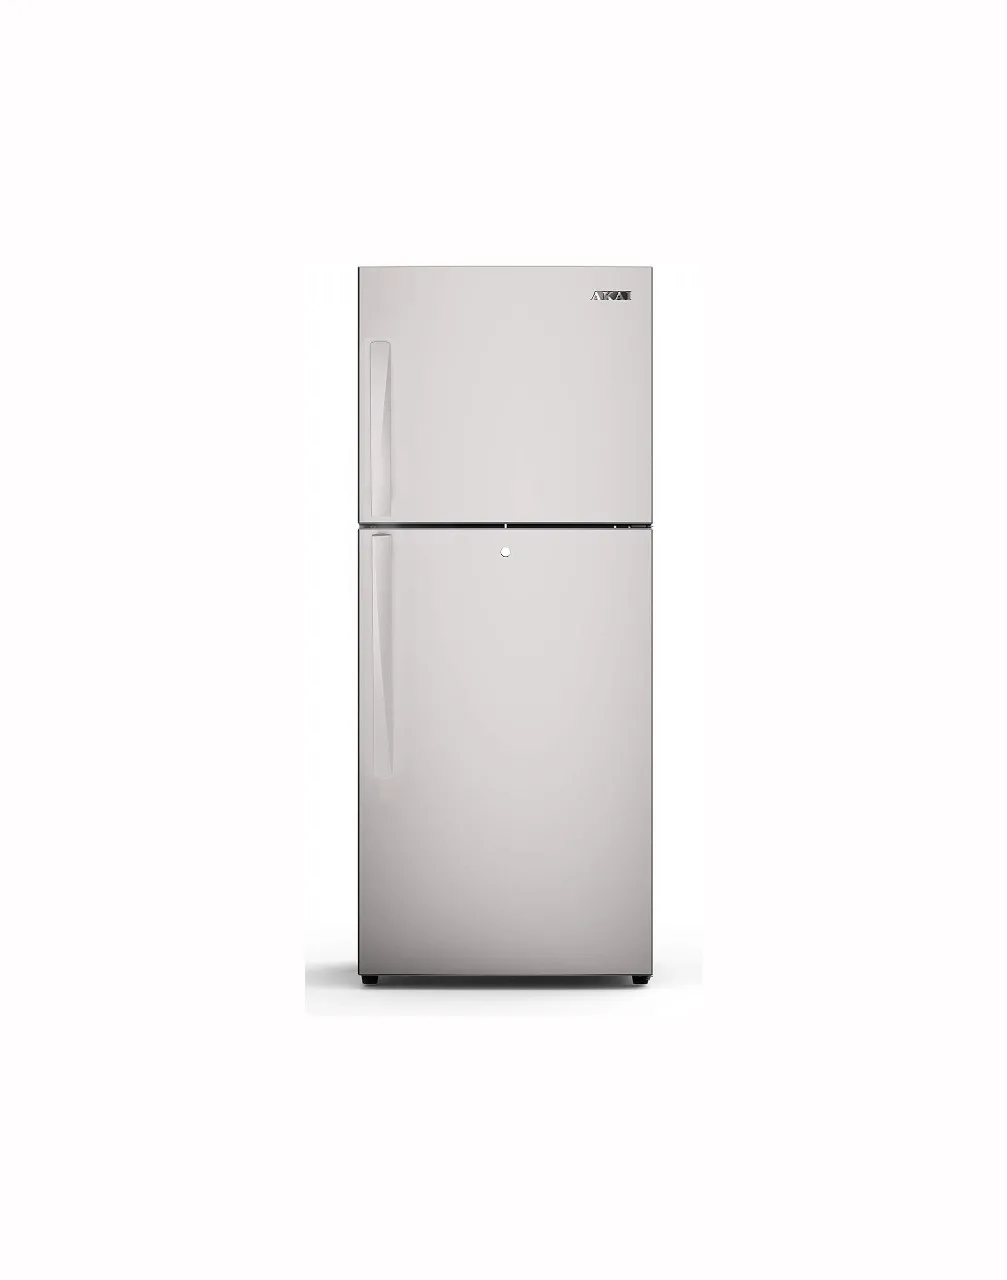 Akai 536 Liter Double Door Refrigerator Color Silver Model | RFMA-536SWIF | 1 Year Full & 5 Year Compressor Warranty.